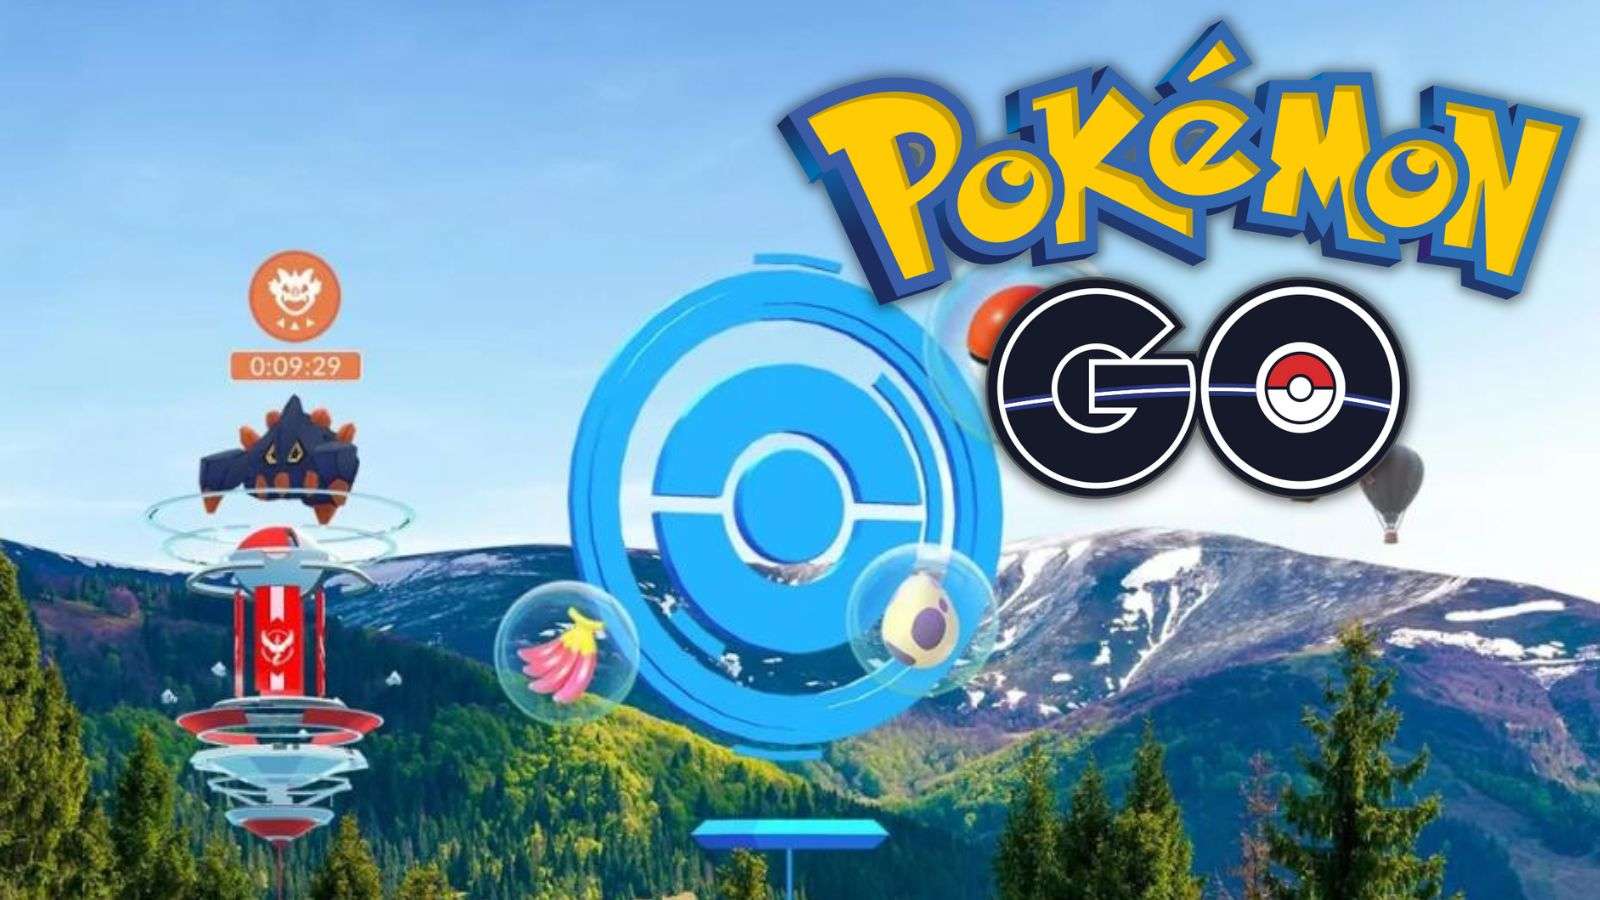 pokemon go pokestop with logo header